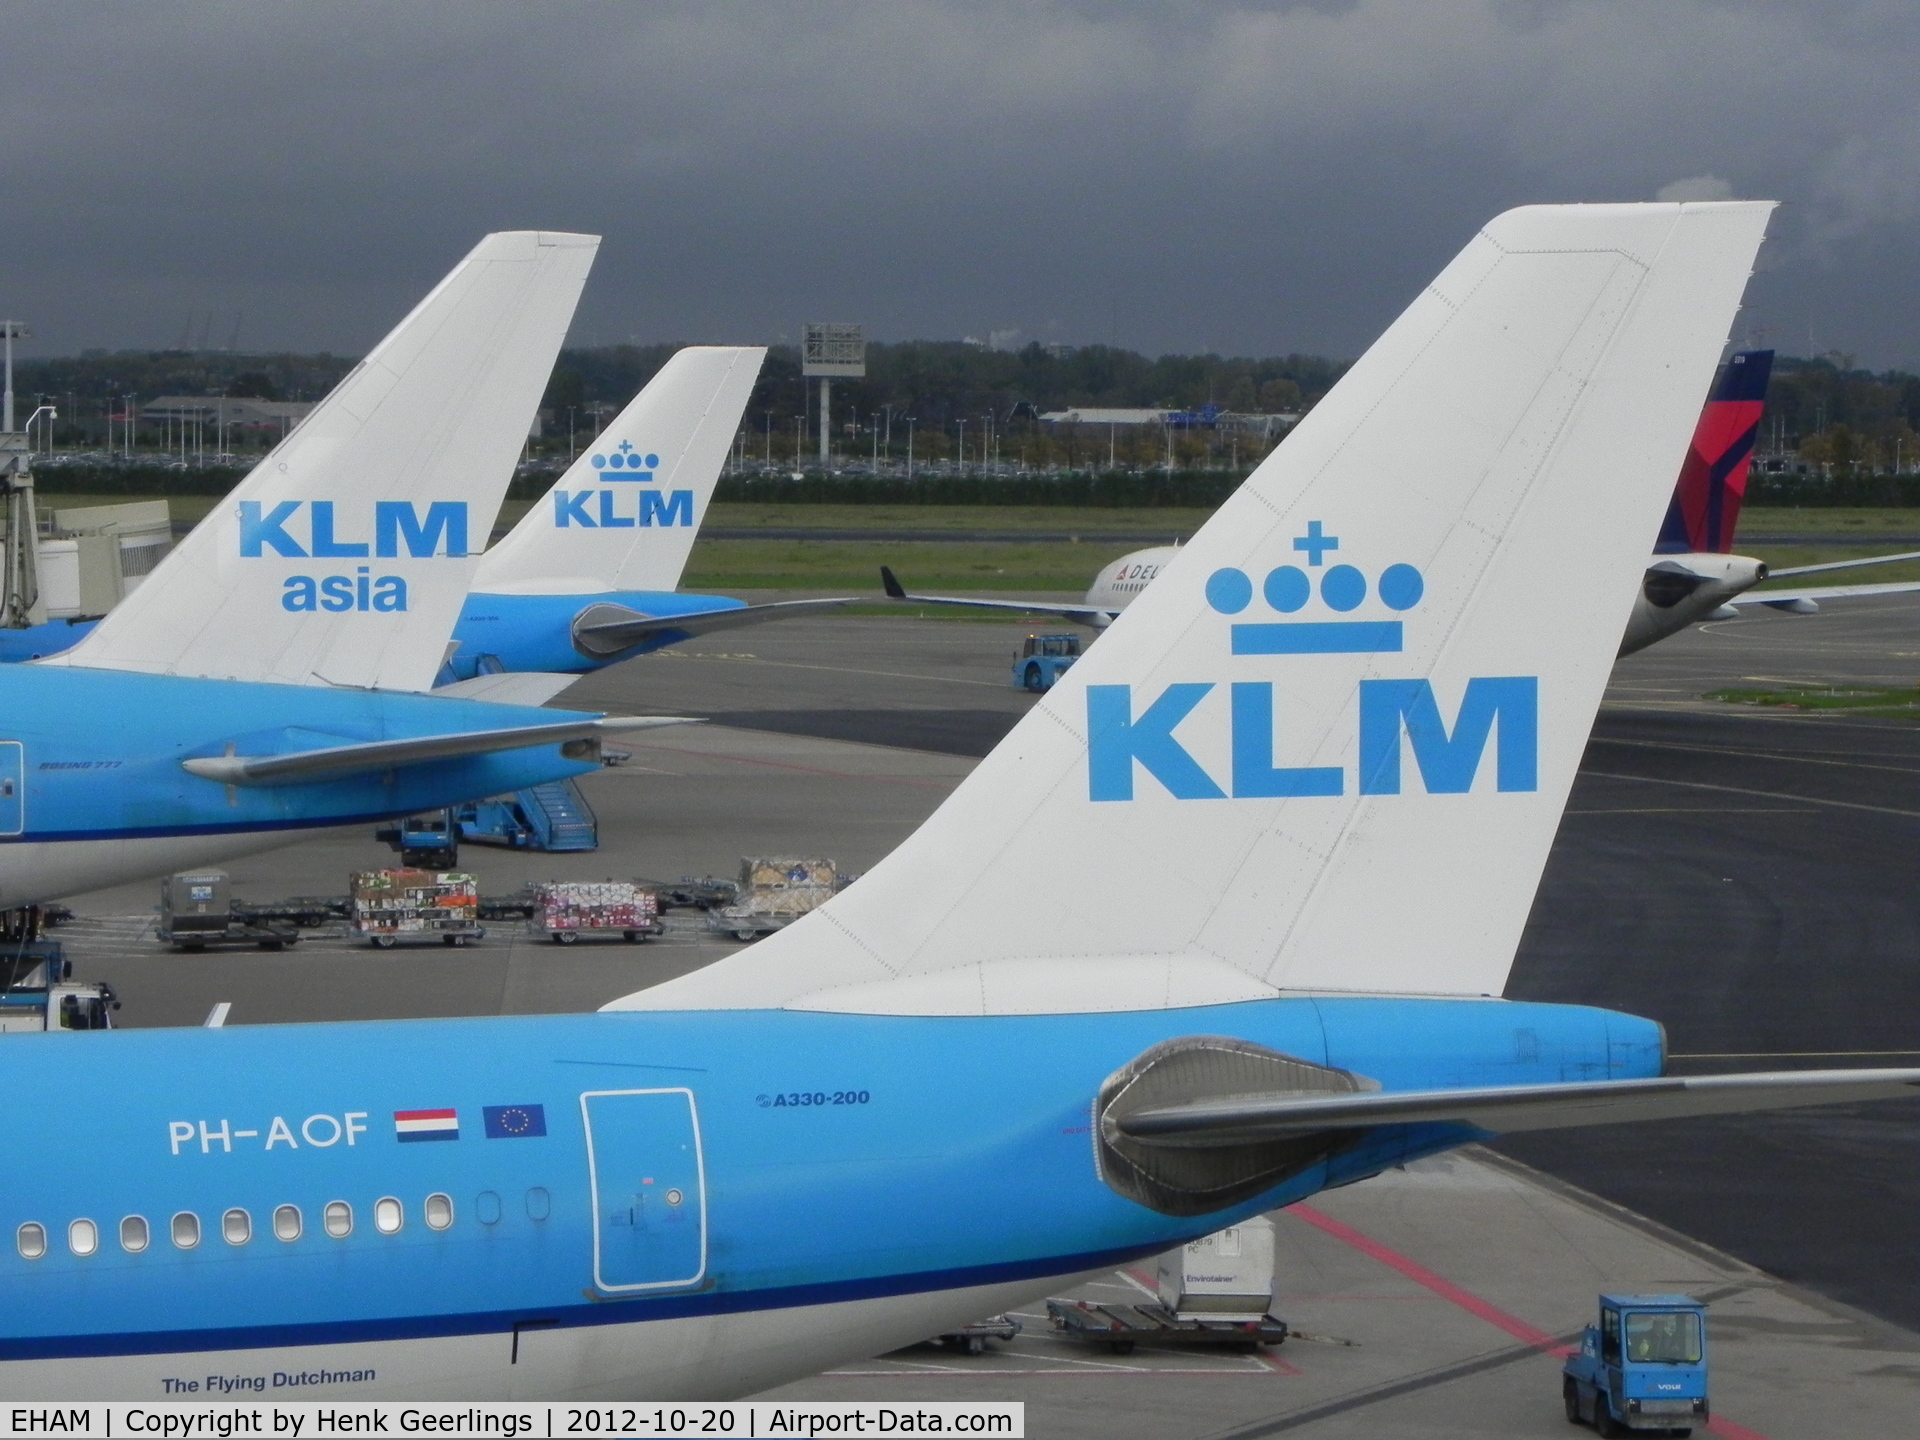 Amsterdam Schiphol Airport, Haarlemmermeer, near Amsterdam Netherlands (EHAM) - Tails of KLM fleet.